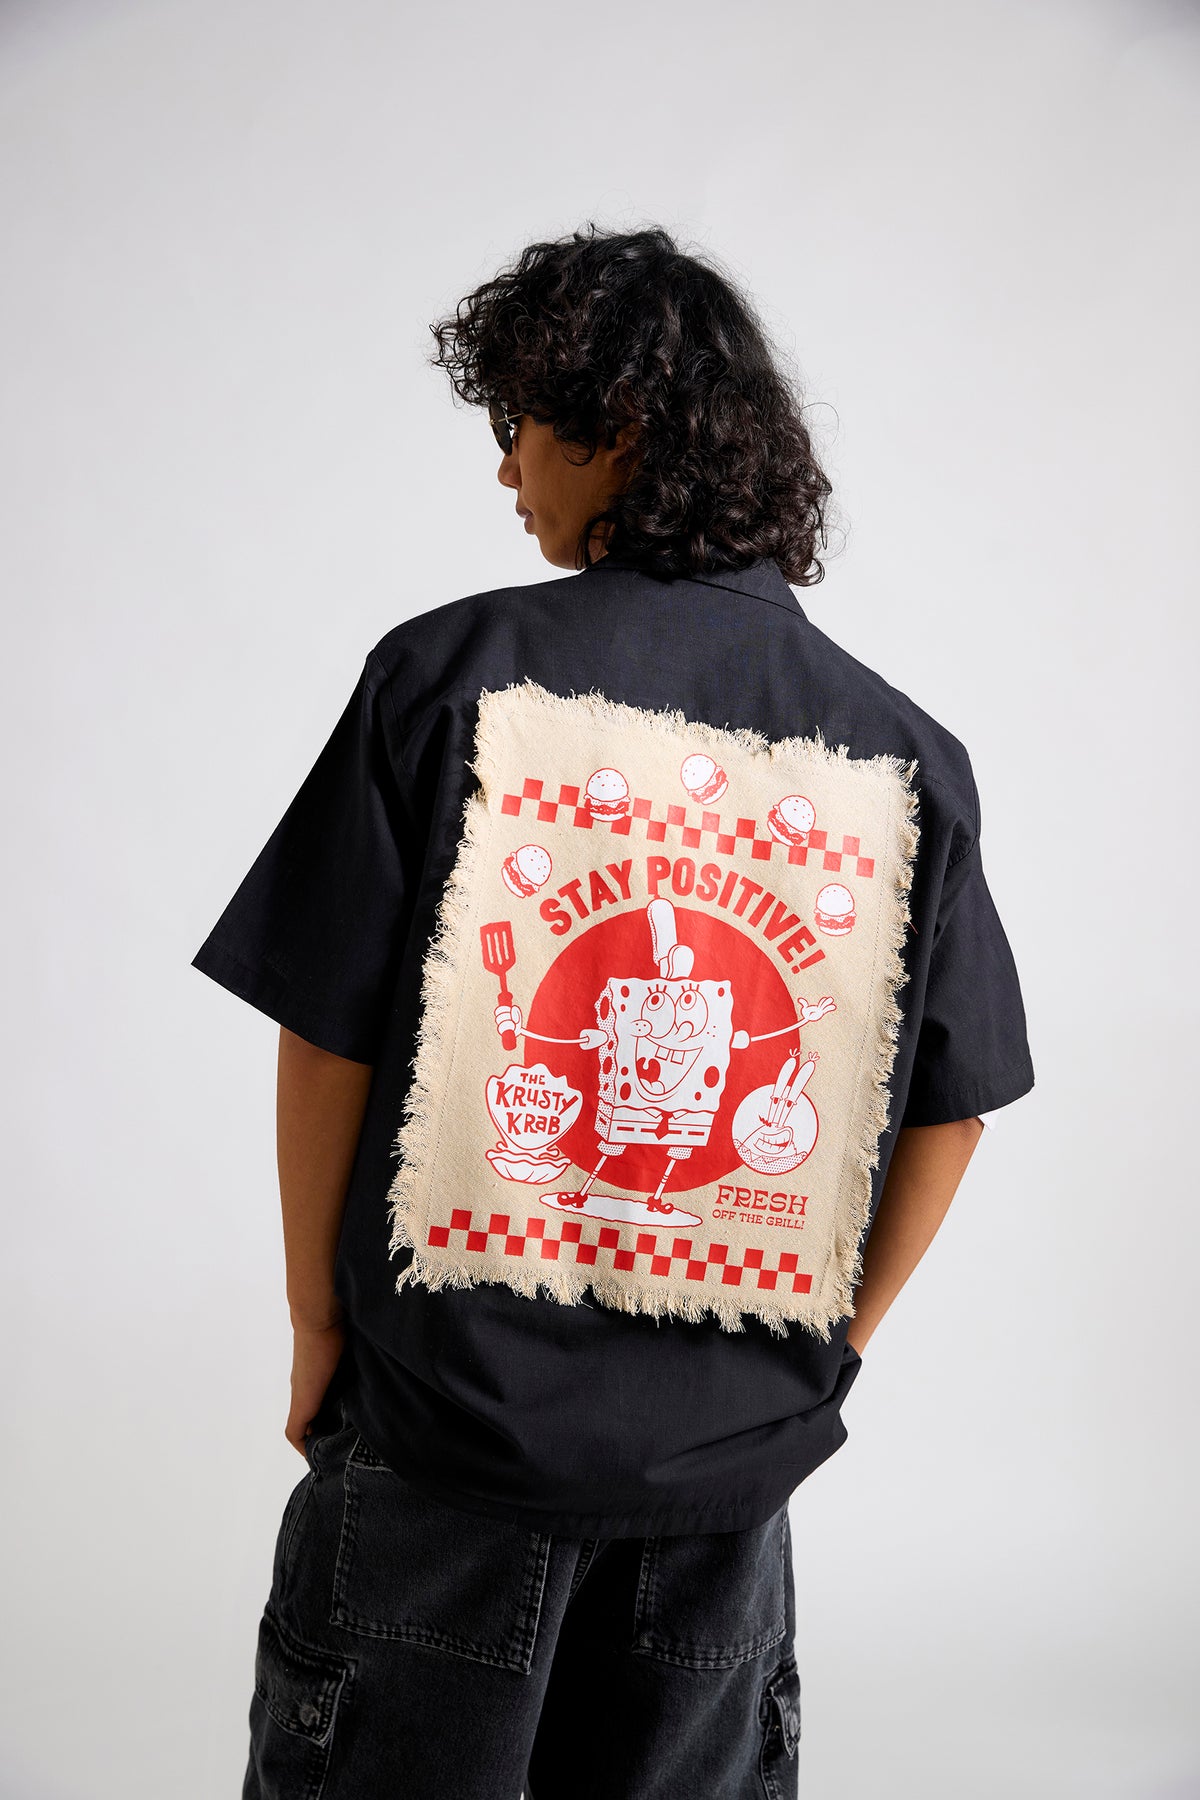 Spongebob:Stay Positive Printed Canvas Cotton Men's Resort Shirt